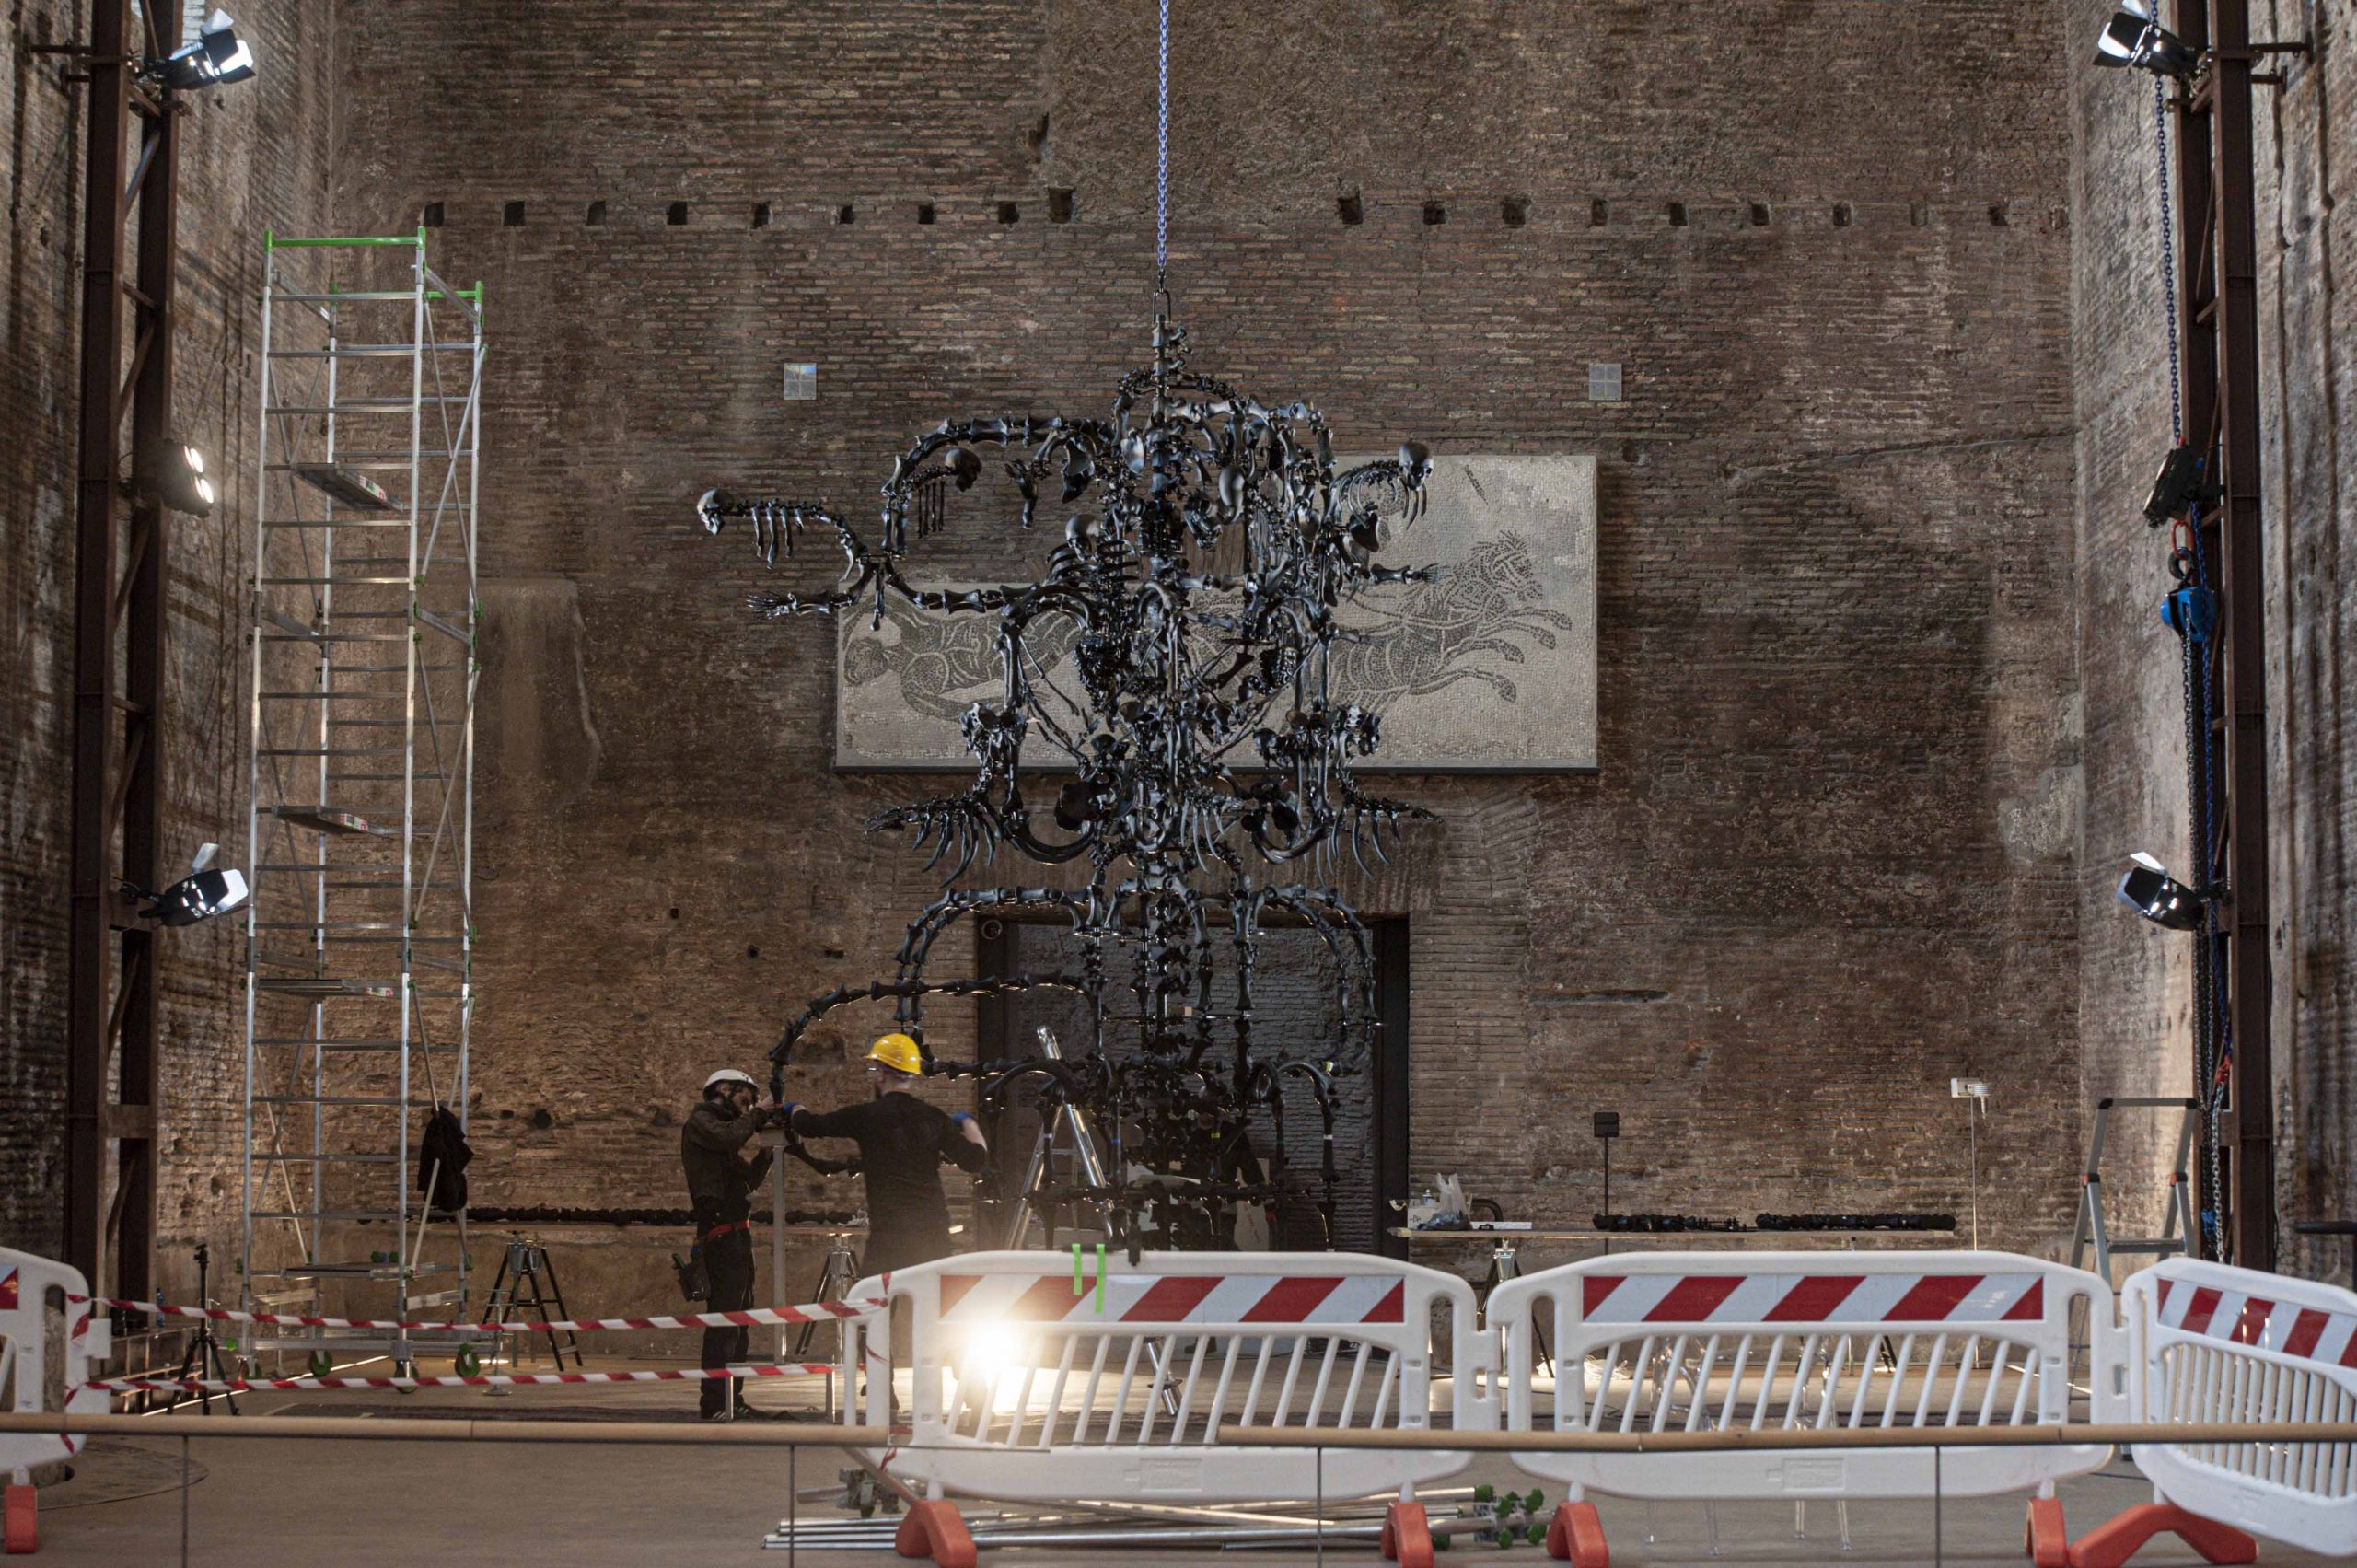 Ai Weiwei's La Commedia Umana backstage in the Terme di Diocleziano